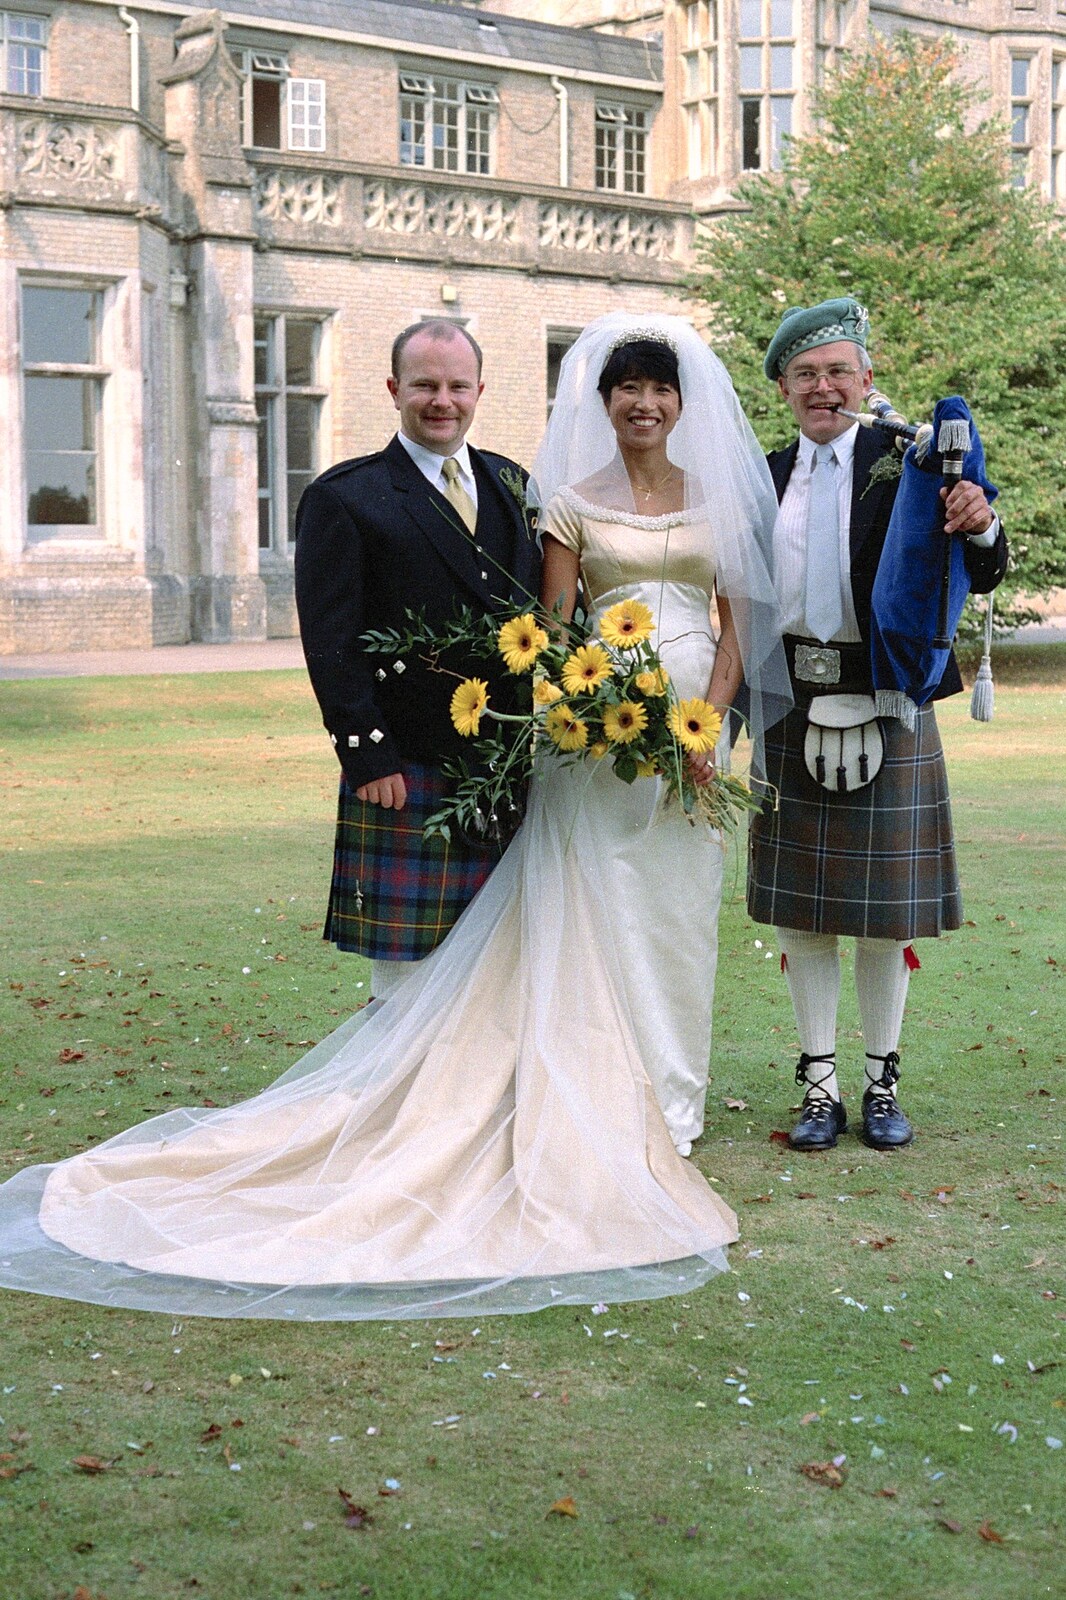 Hamish and Jane's Wedding, Canford School, Wimborne, Dorset - 5th August 1998: Hamish, Jane and John